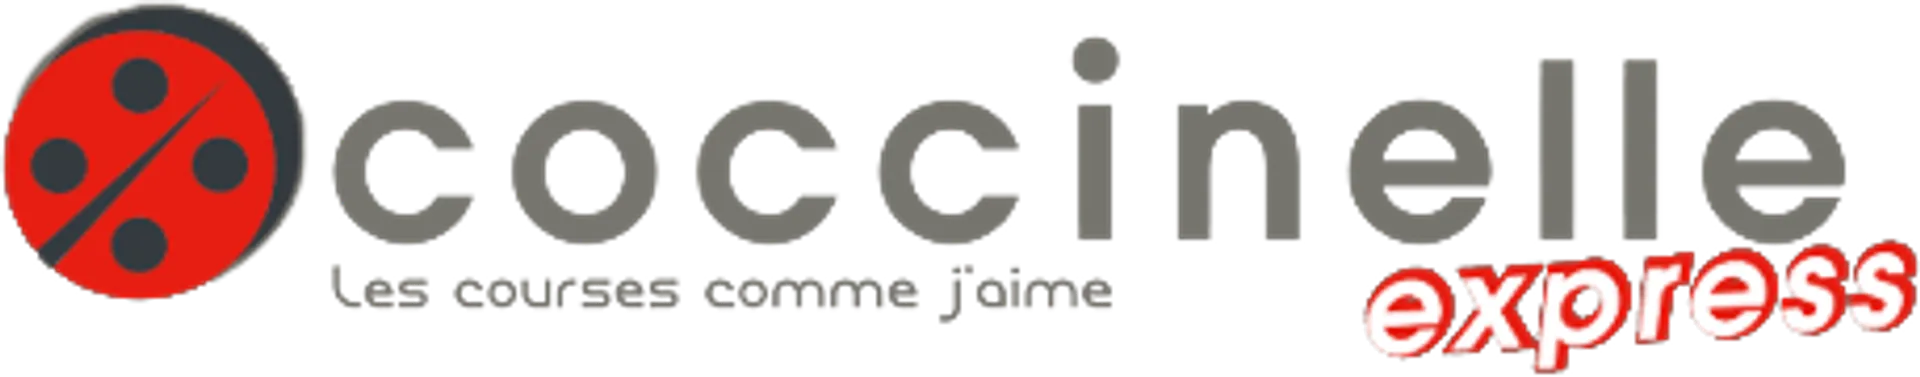 COCCINELLE EXPRESS logo